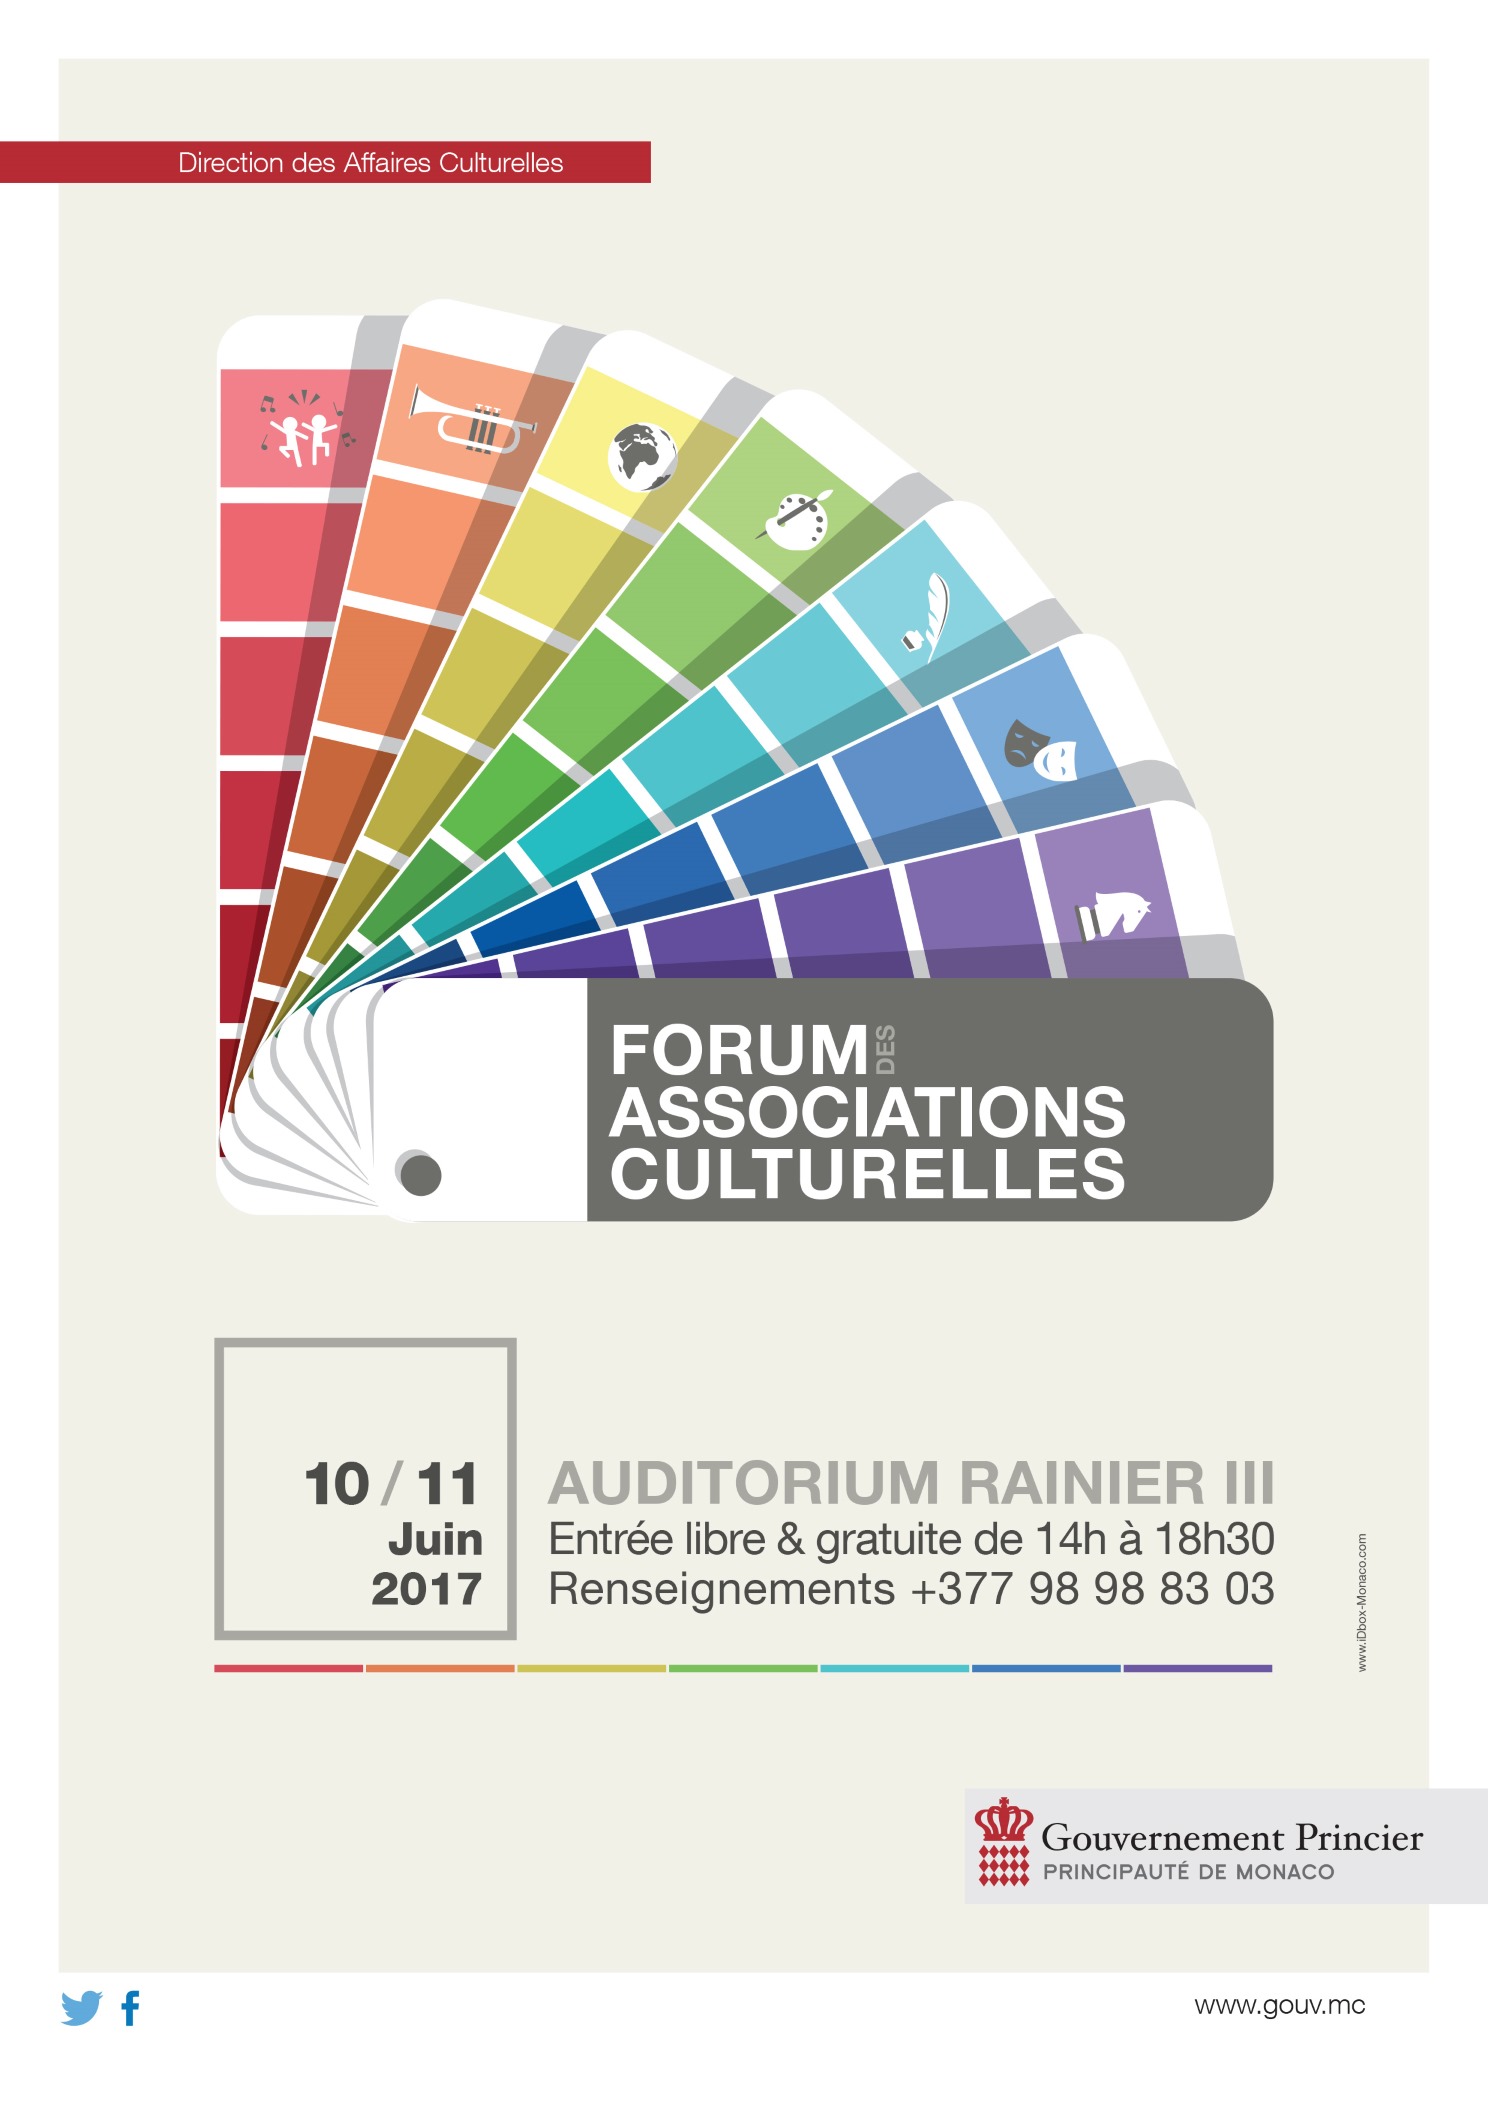 Forum des Associations Culturelles